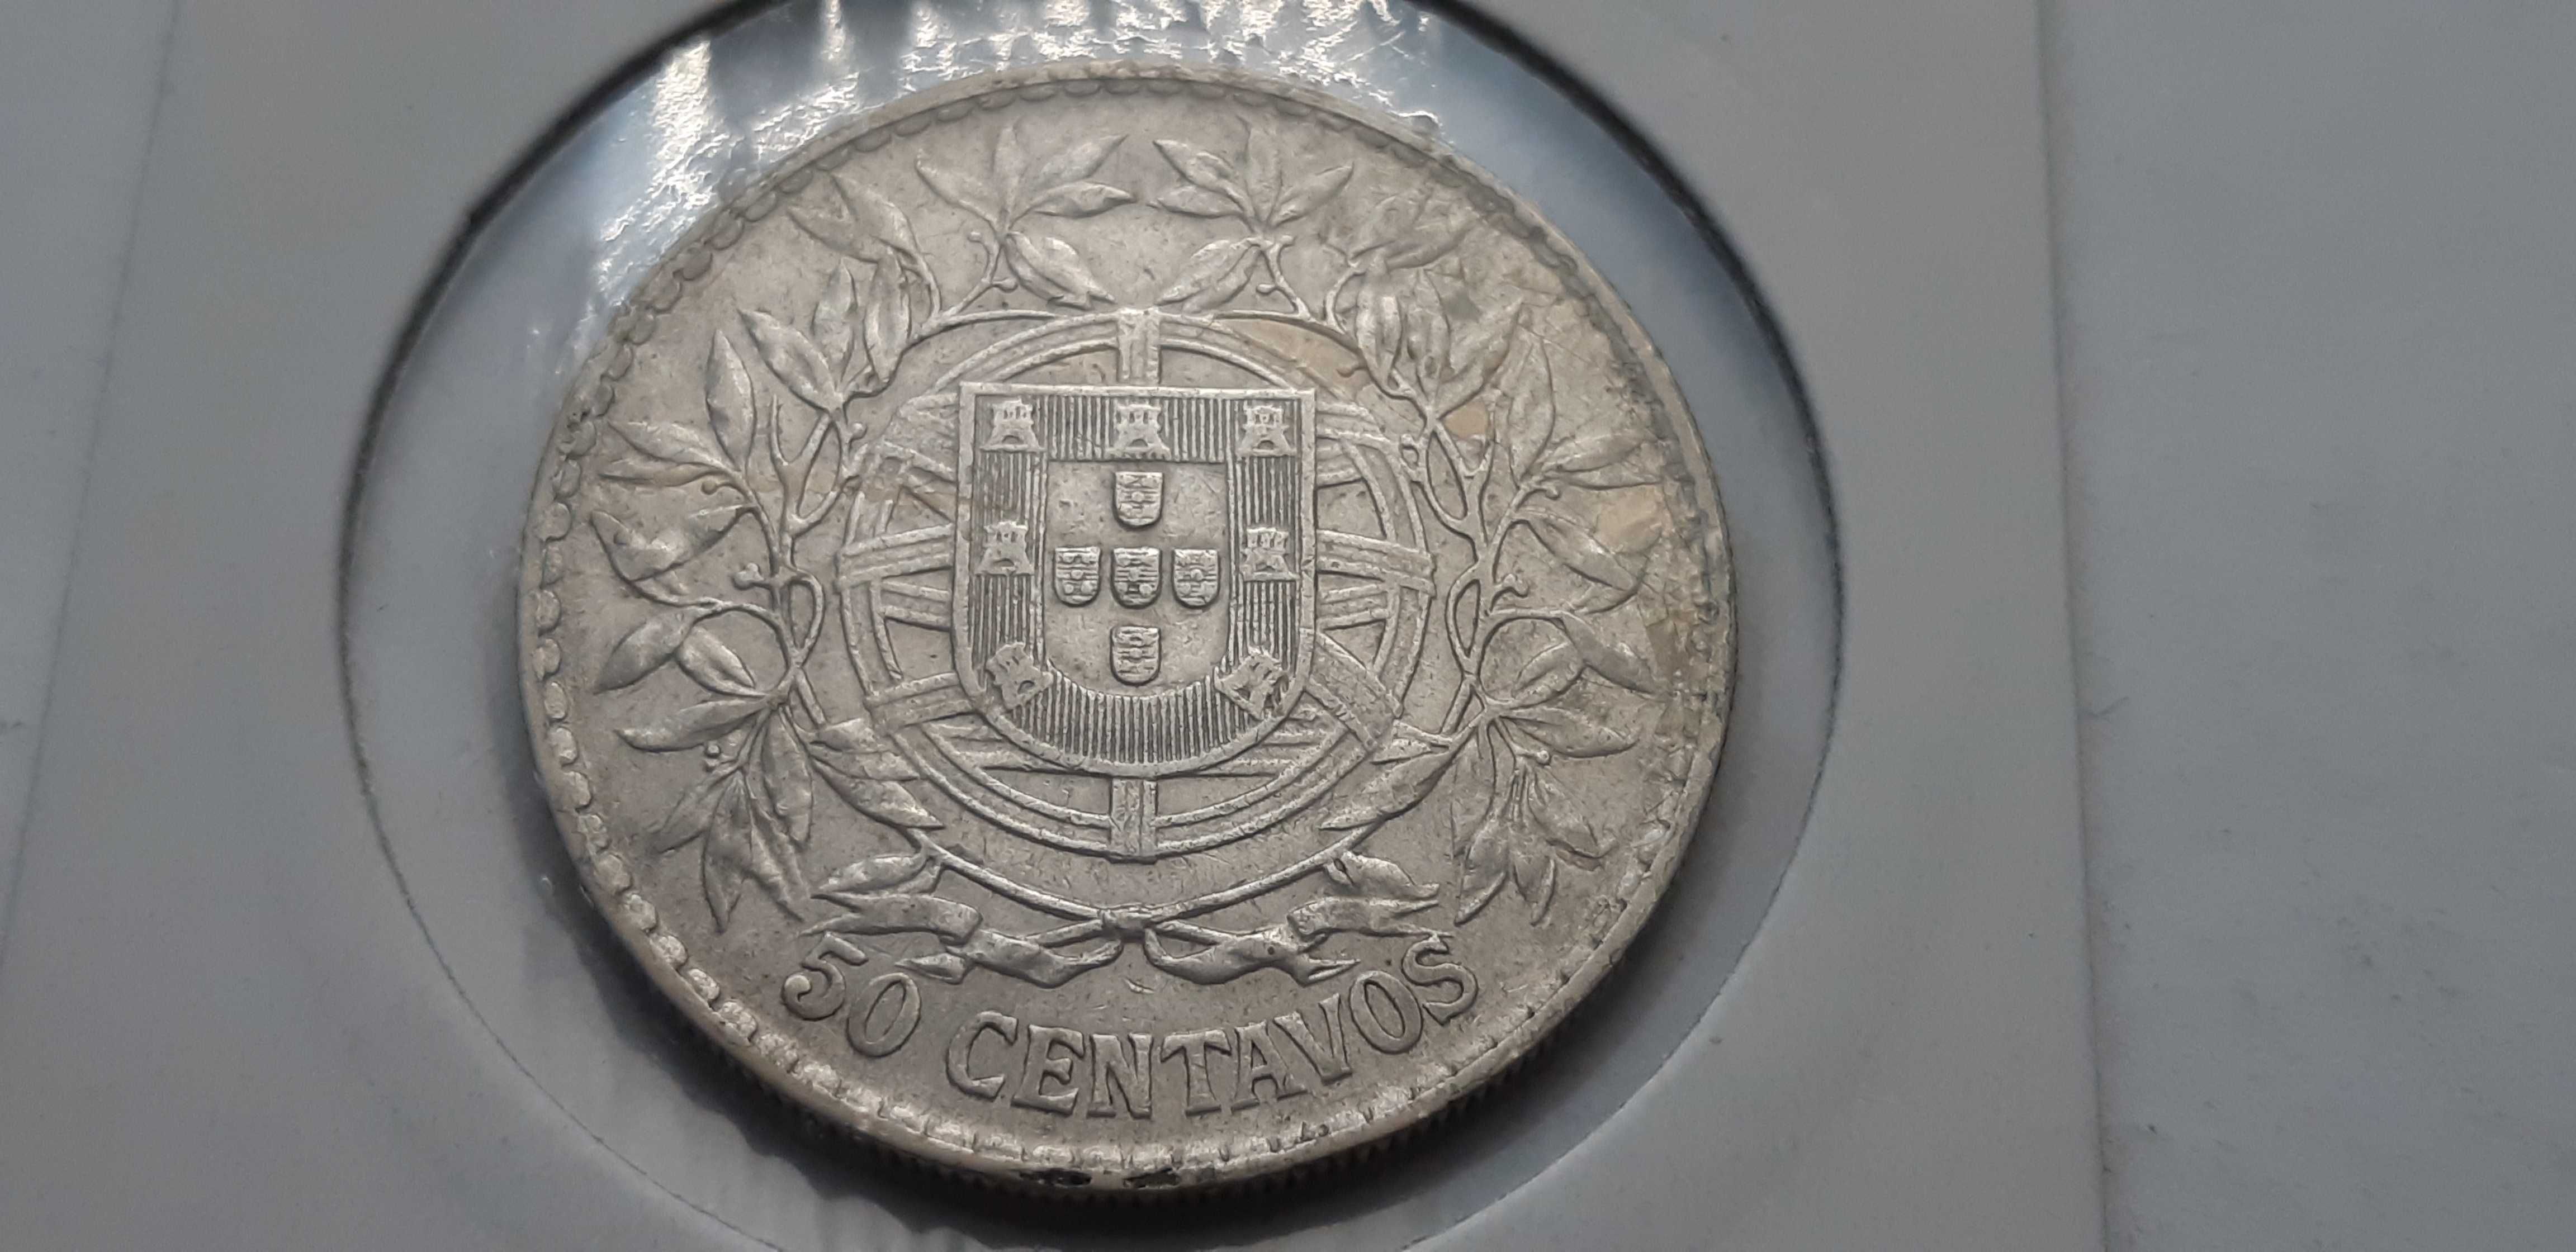 Portugalia 50 centavos 1913 rok srebro - real foto